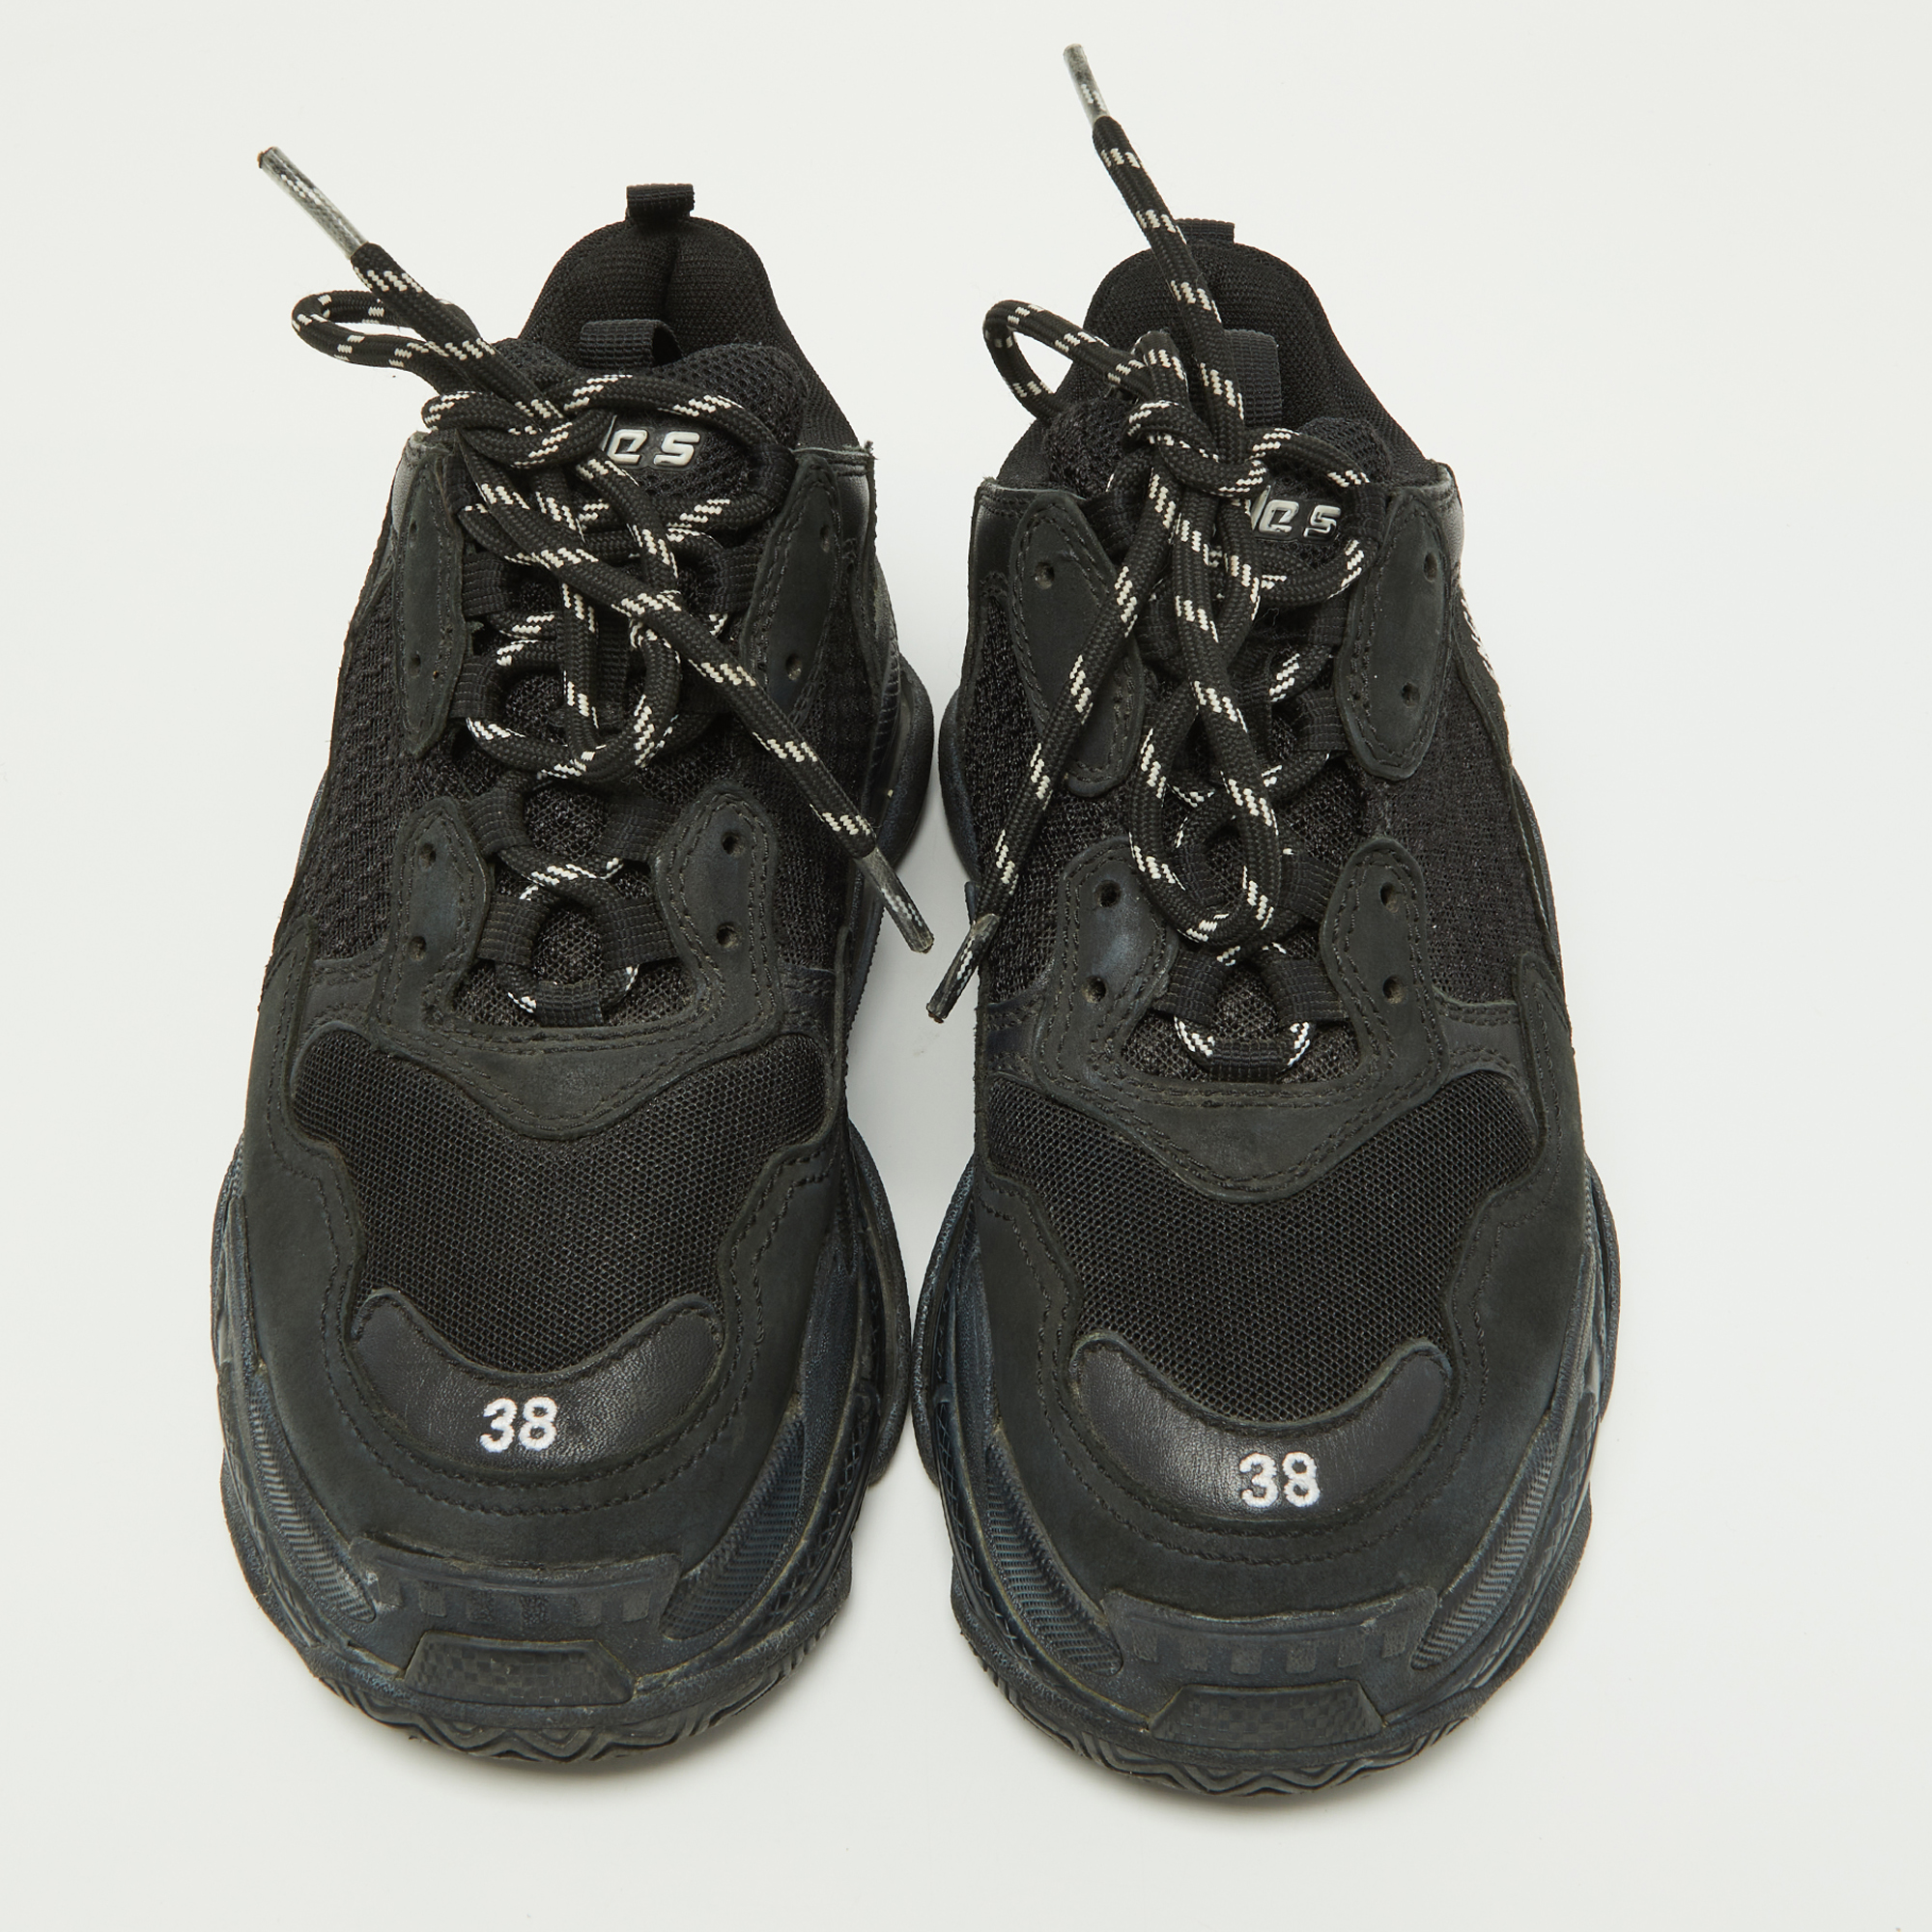 Balenciaga Black Mesh,Nubuck And Nubuck Triple S Sneakers Size 38